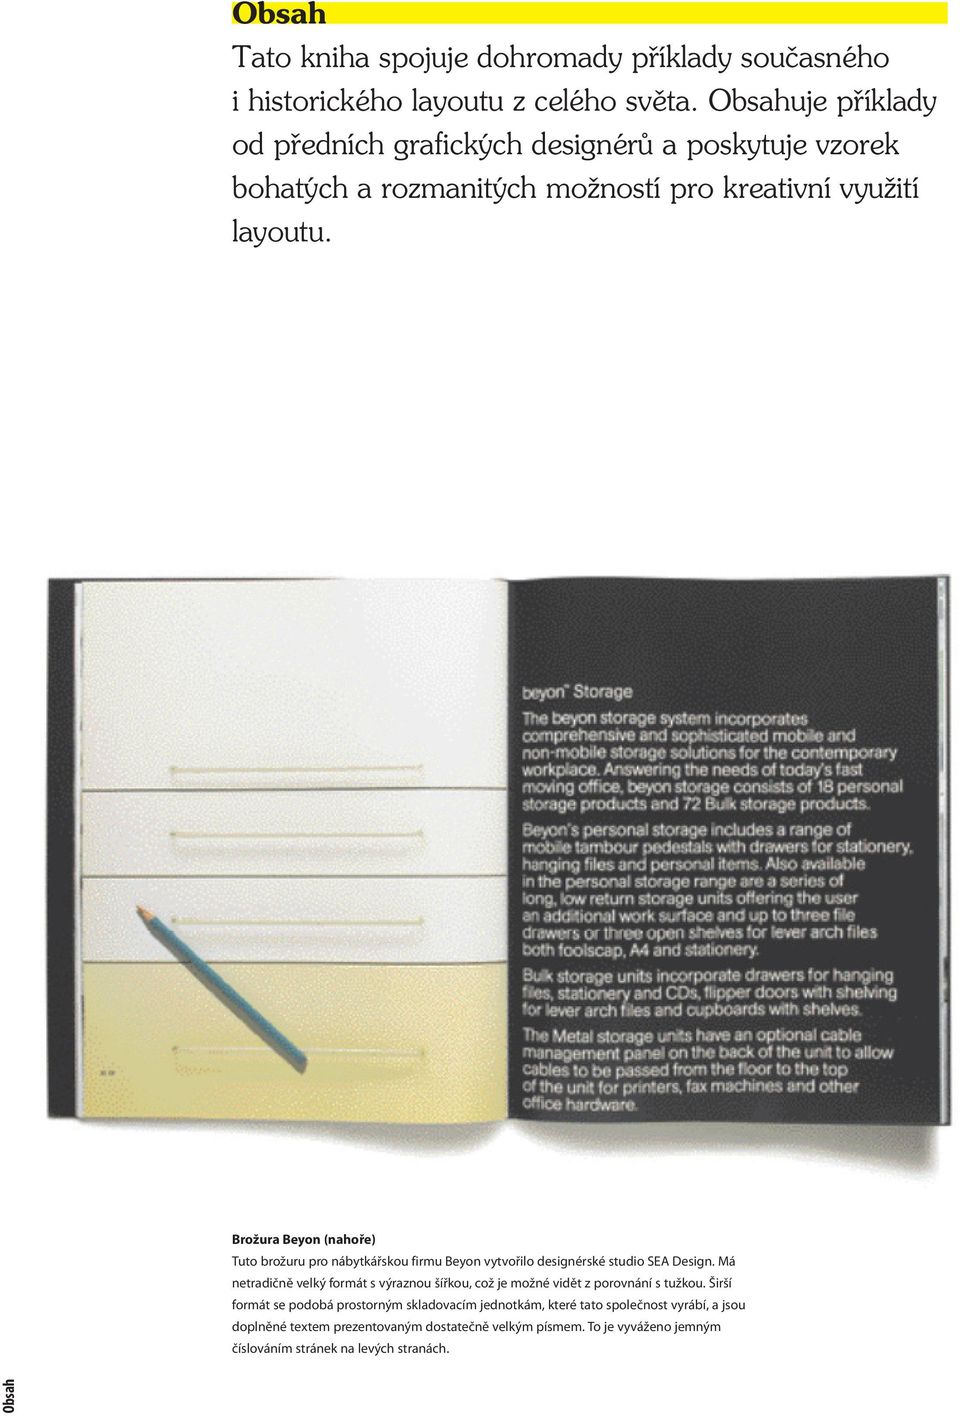 Brožura Beyon (nahoře) Tuto brožuru pro nábytkářskou firmu Beyon vytvořilo designérské studio SEA Design.